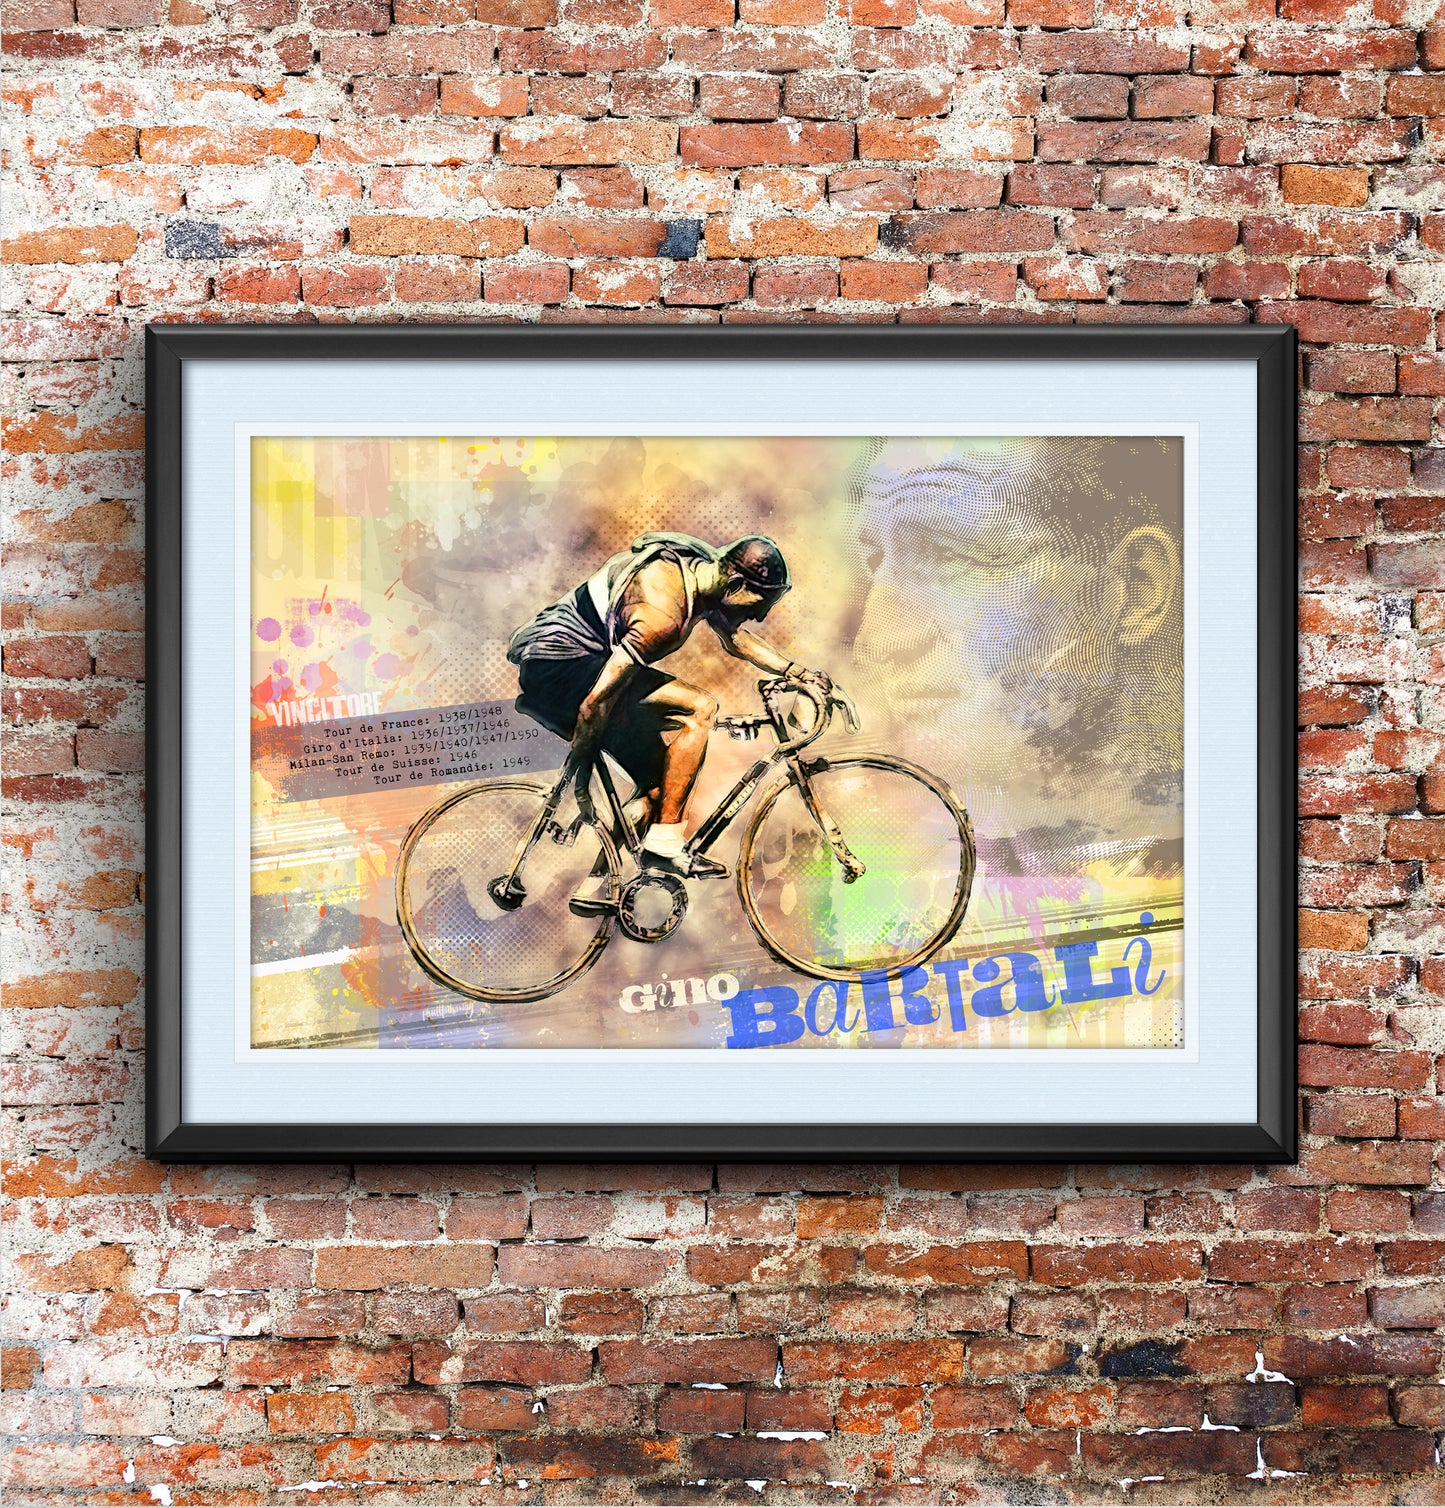 Gino Bartali - Cycling Art Print